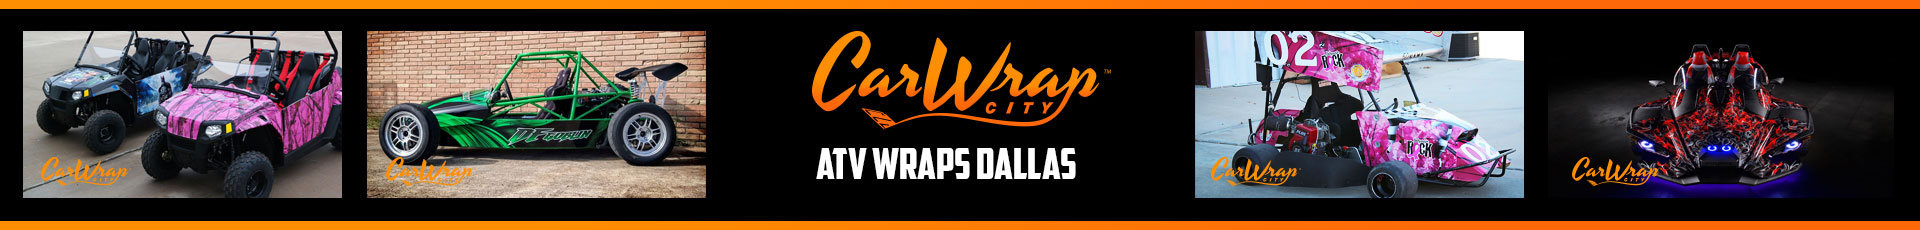 ATV Wraps Dallas